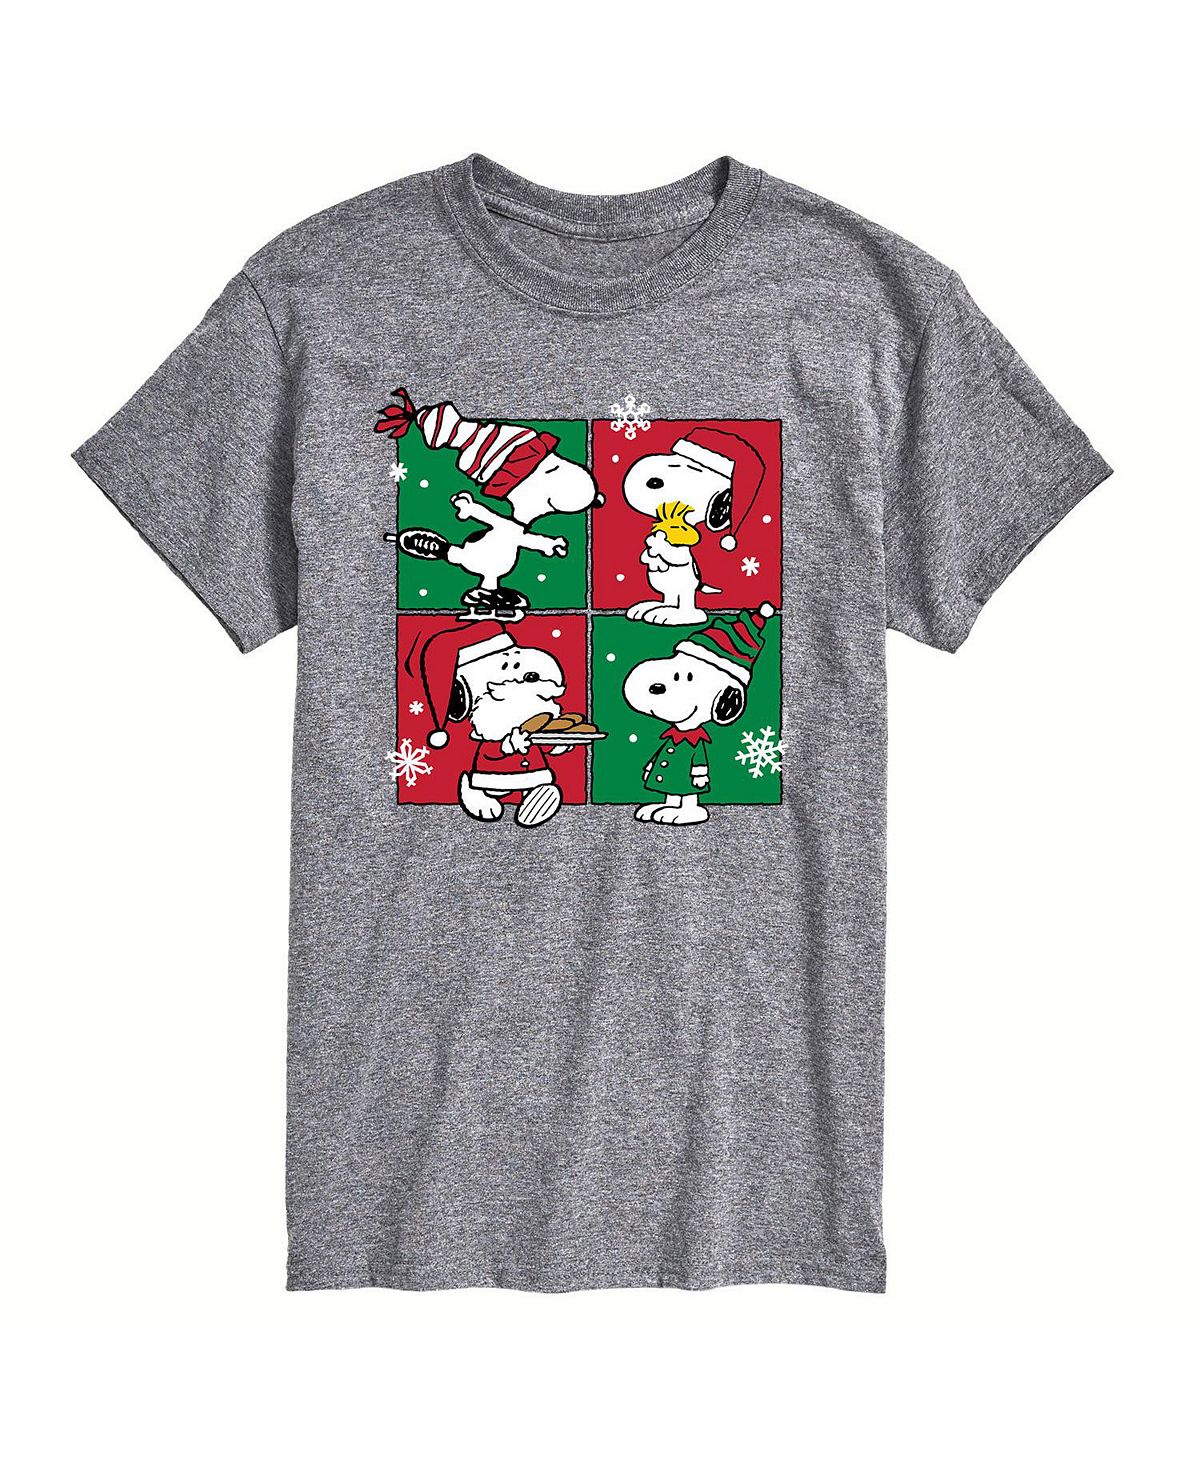 Мужская рождественская футболка с коротким рукавом peanuts AIRWAVES, серый мужская гибридная футболка с коротким рукавом football turkey nap с повторяющимся рисунком airwaves серый